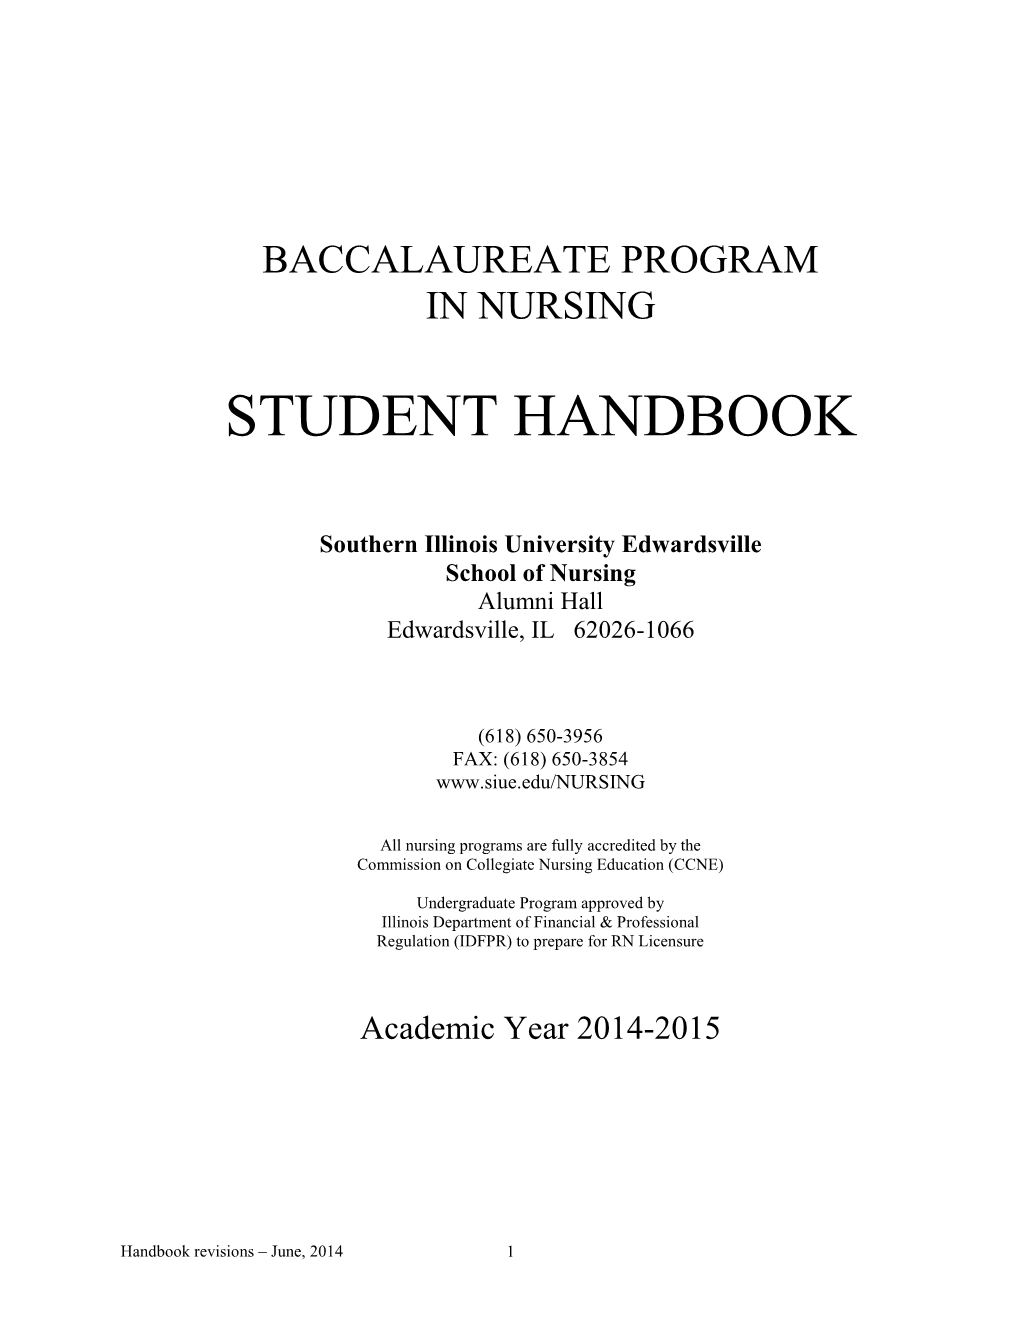 Baccalaureate Program in Nursing